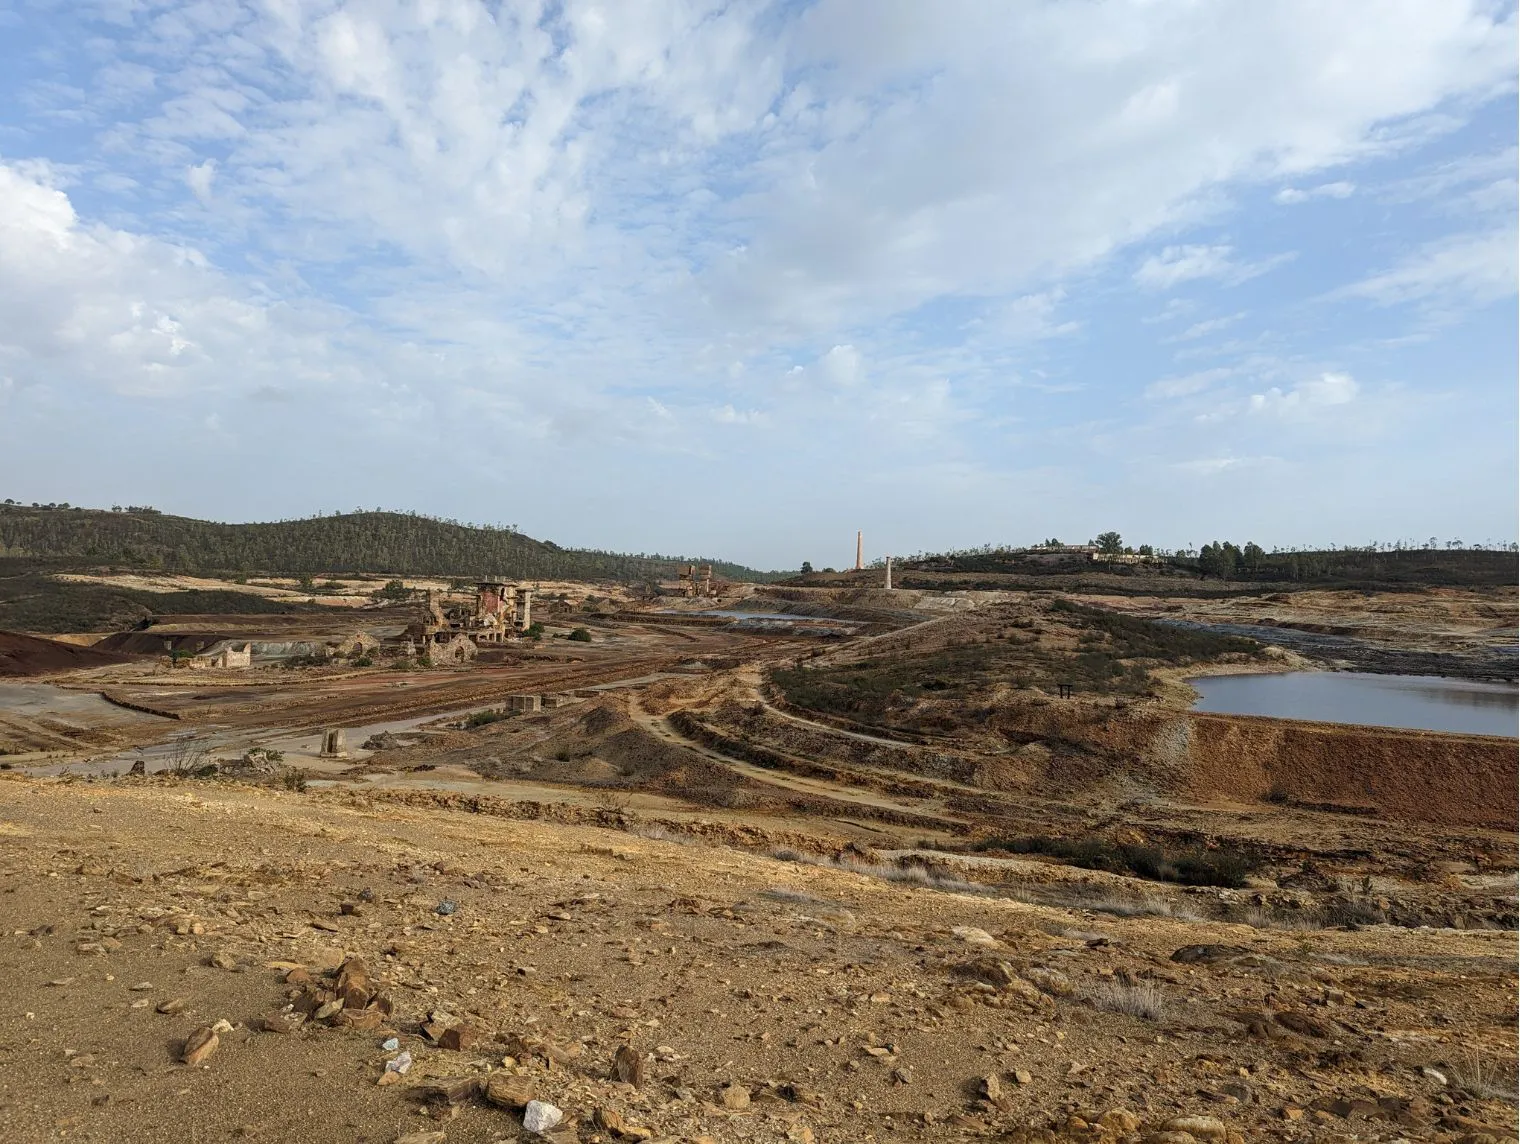 Vue de loin de la mine de Sao Domingo sur le tracé de l'ACT Portugal